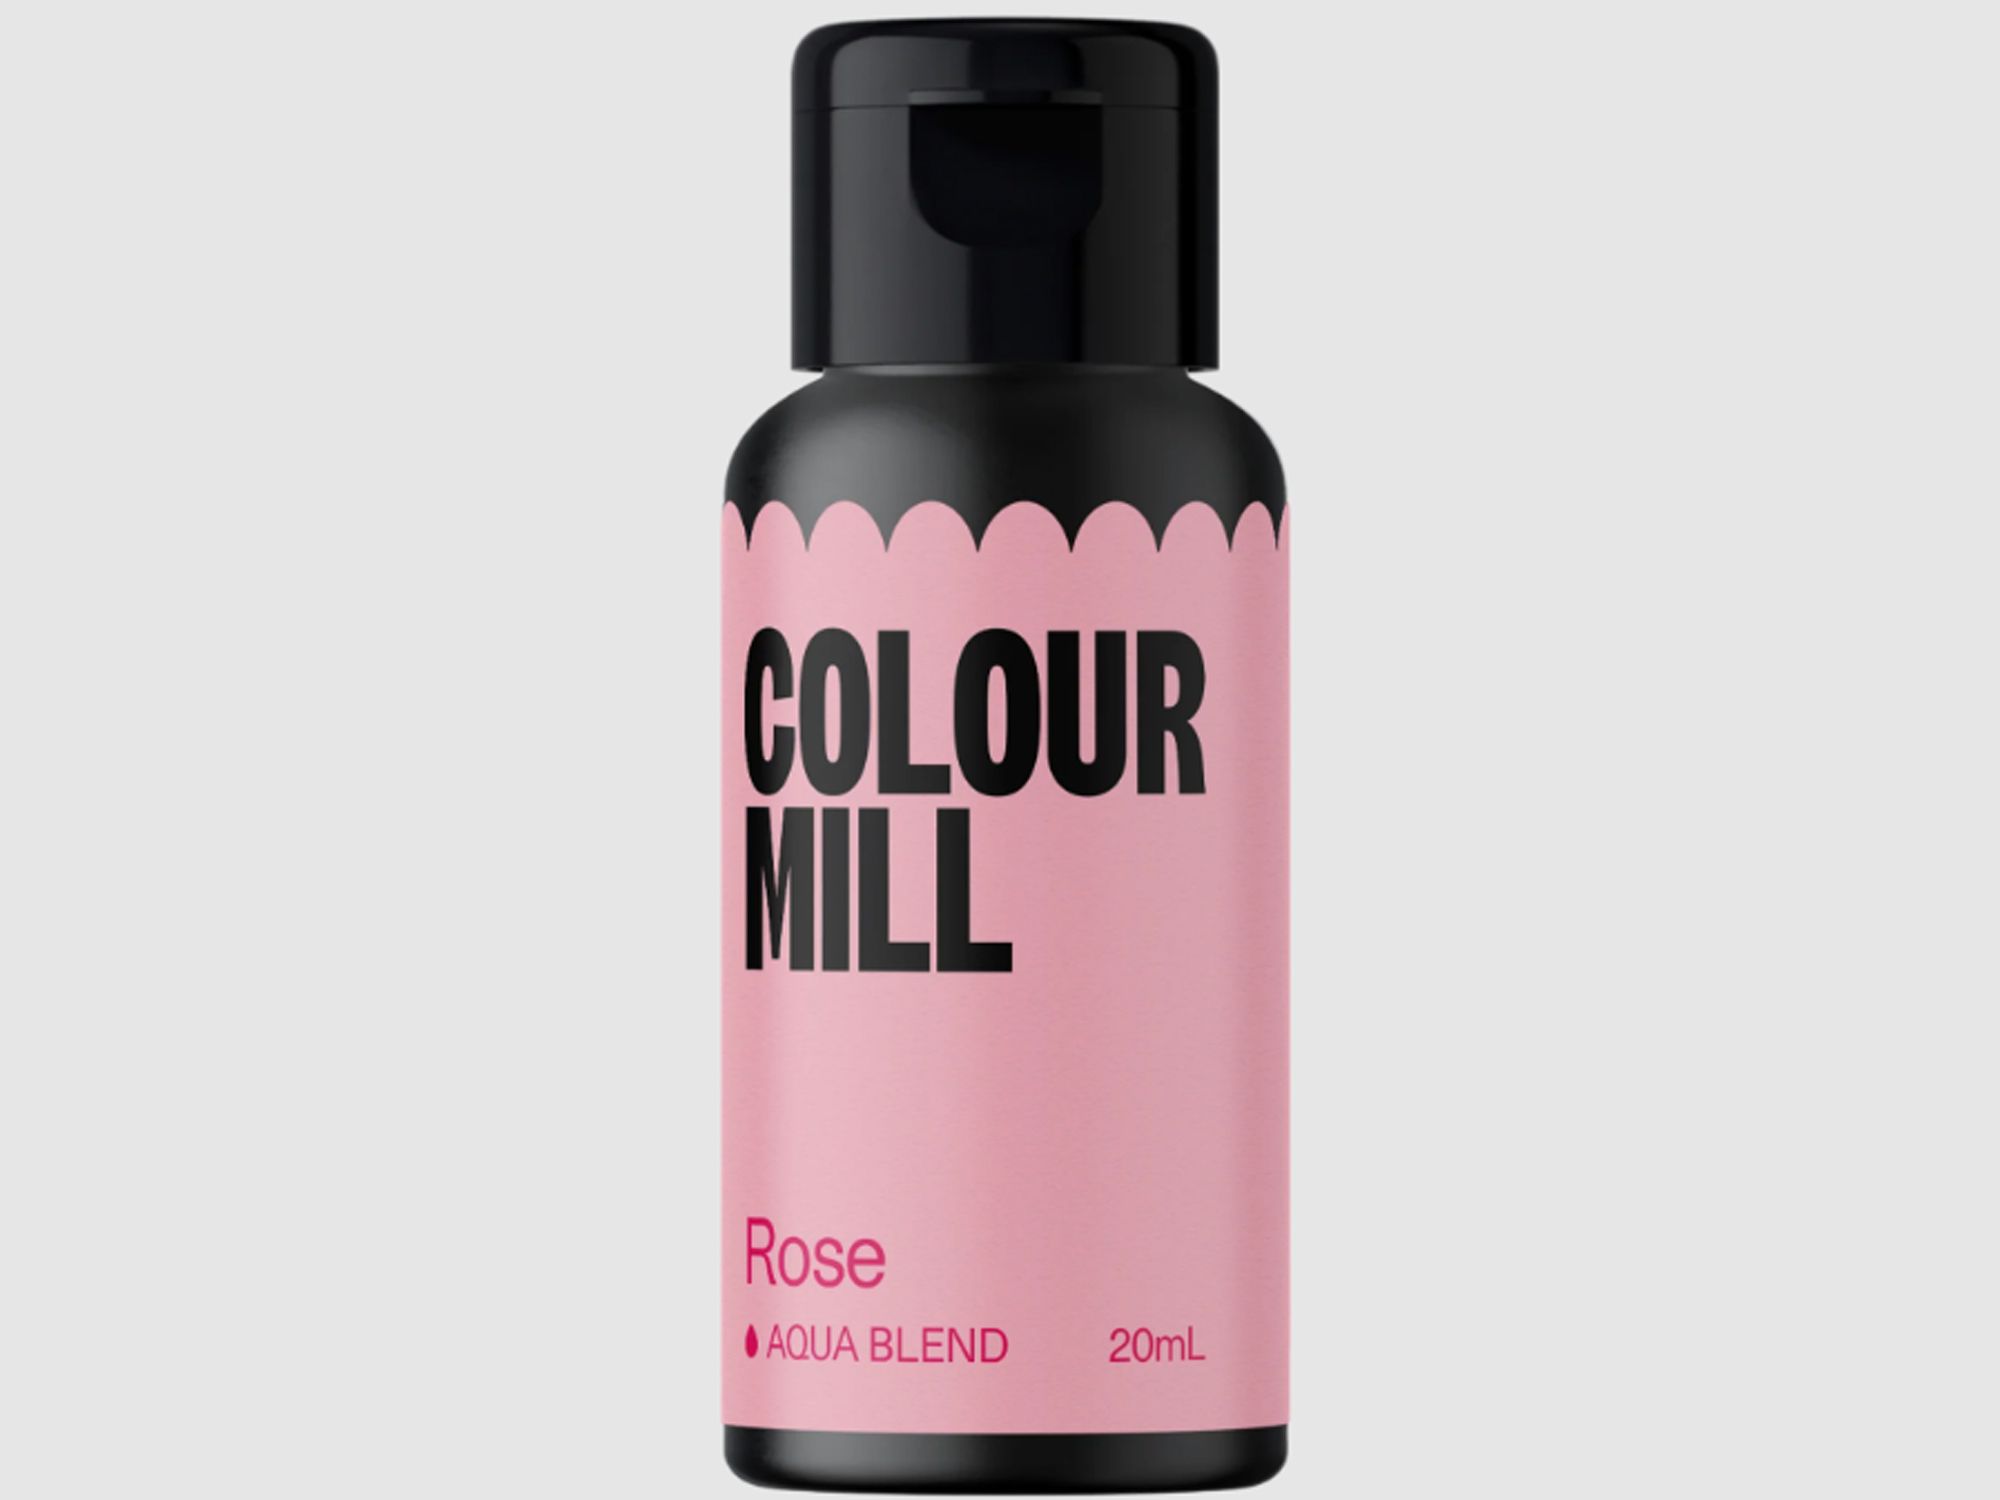 Colour Mill Rose (Aqua Blend) 20ml